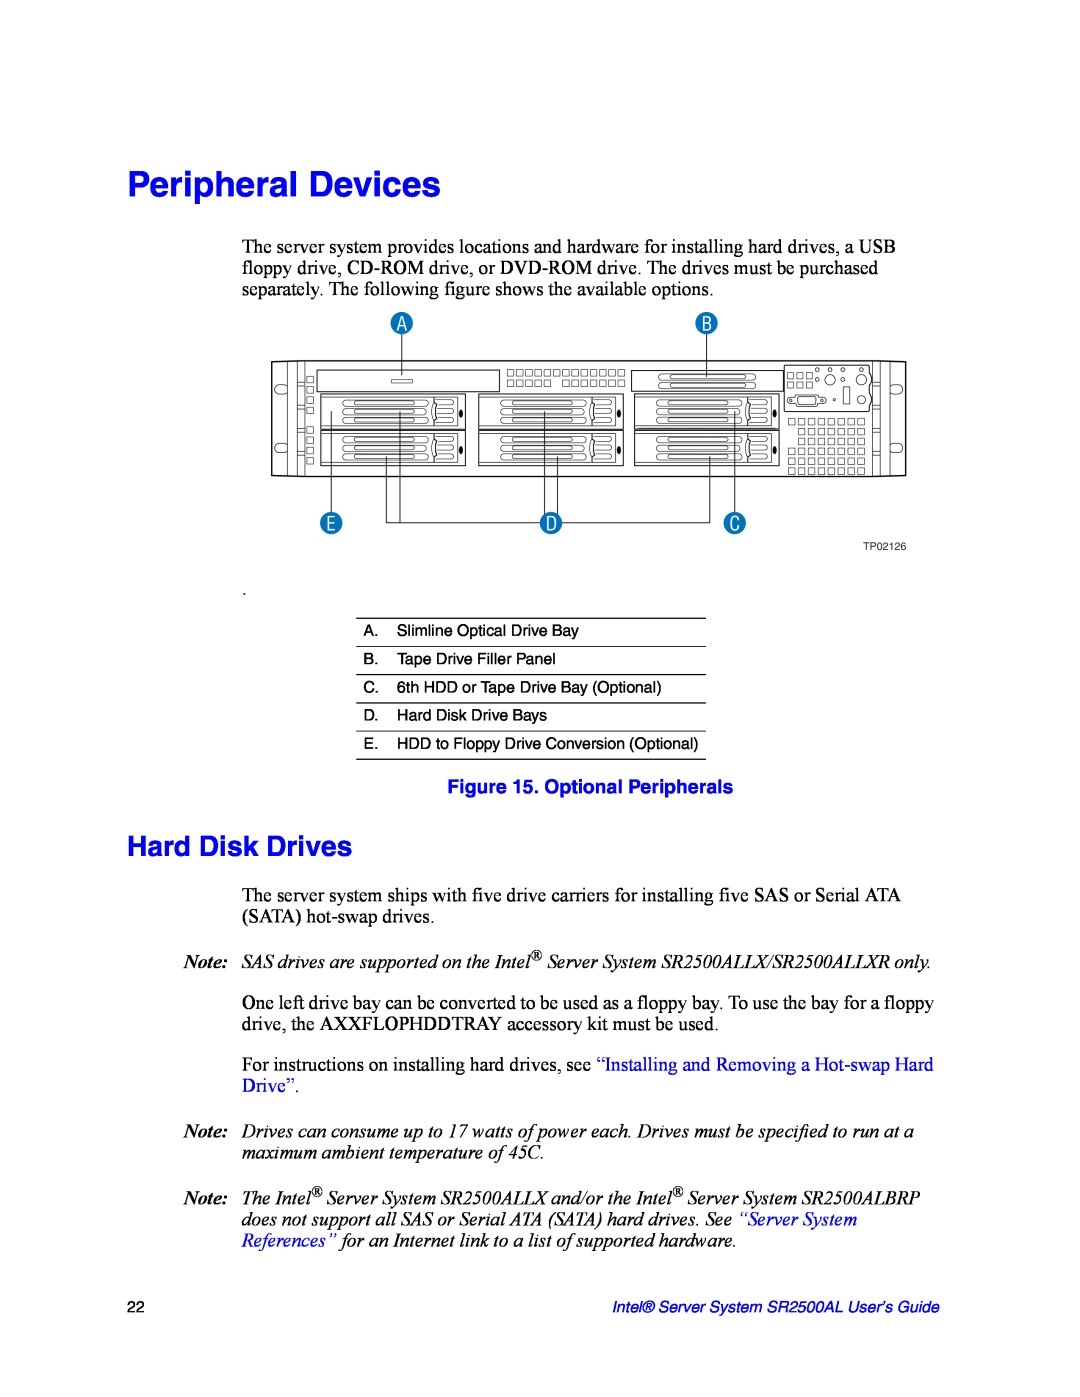 Intel SR2500AL manual Peripheral Devices, Hard Disk Drives, Optional Peripherals 